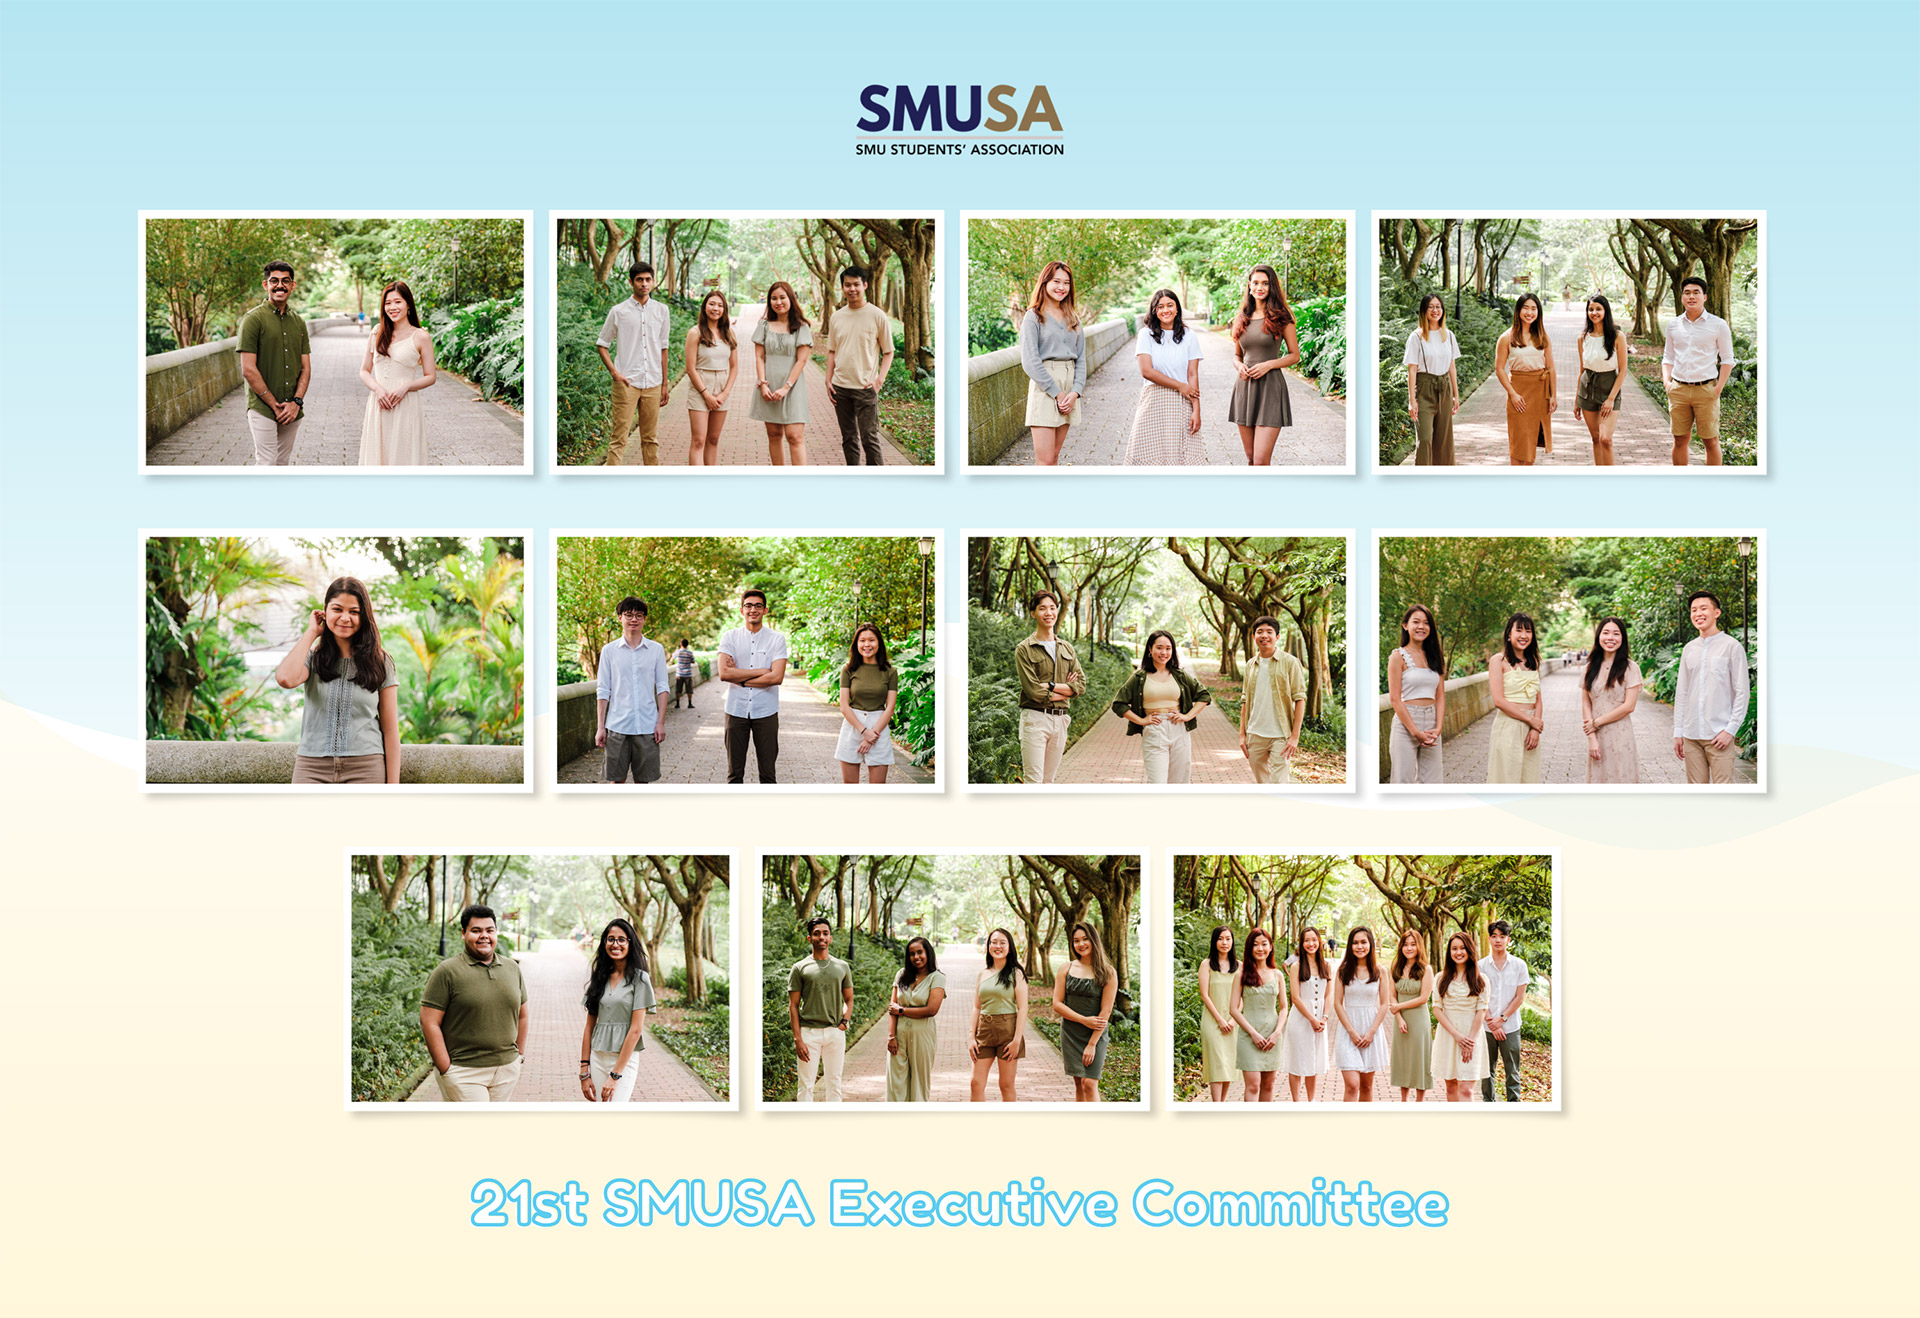 Singapore Management University Students' Association (SMUSA)